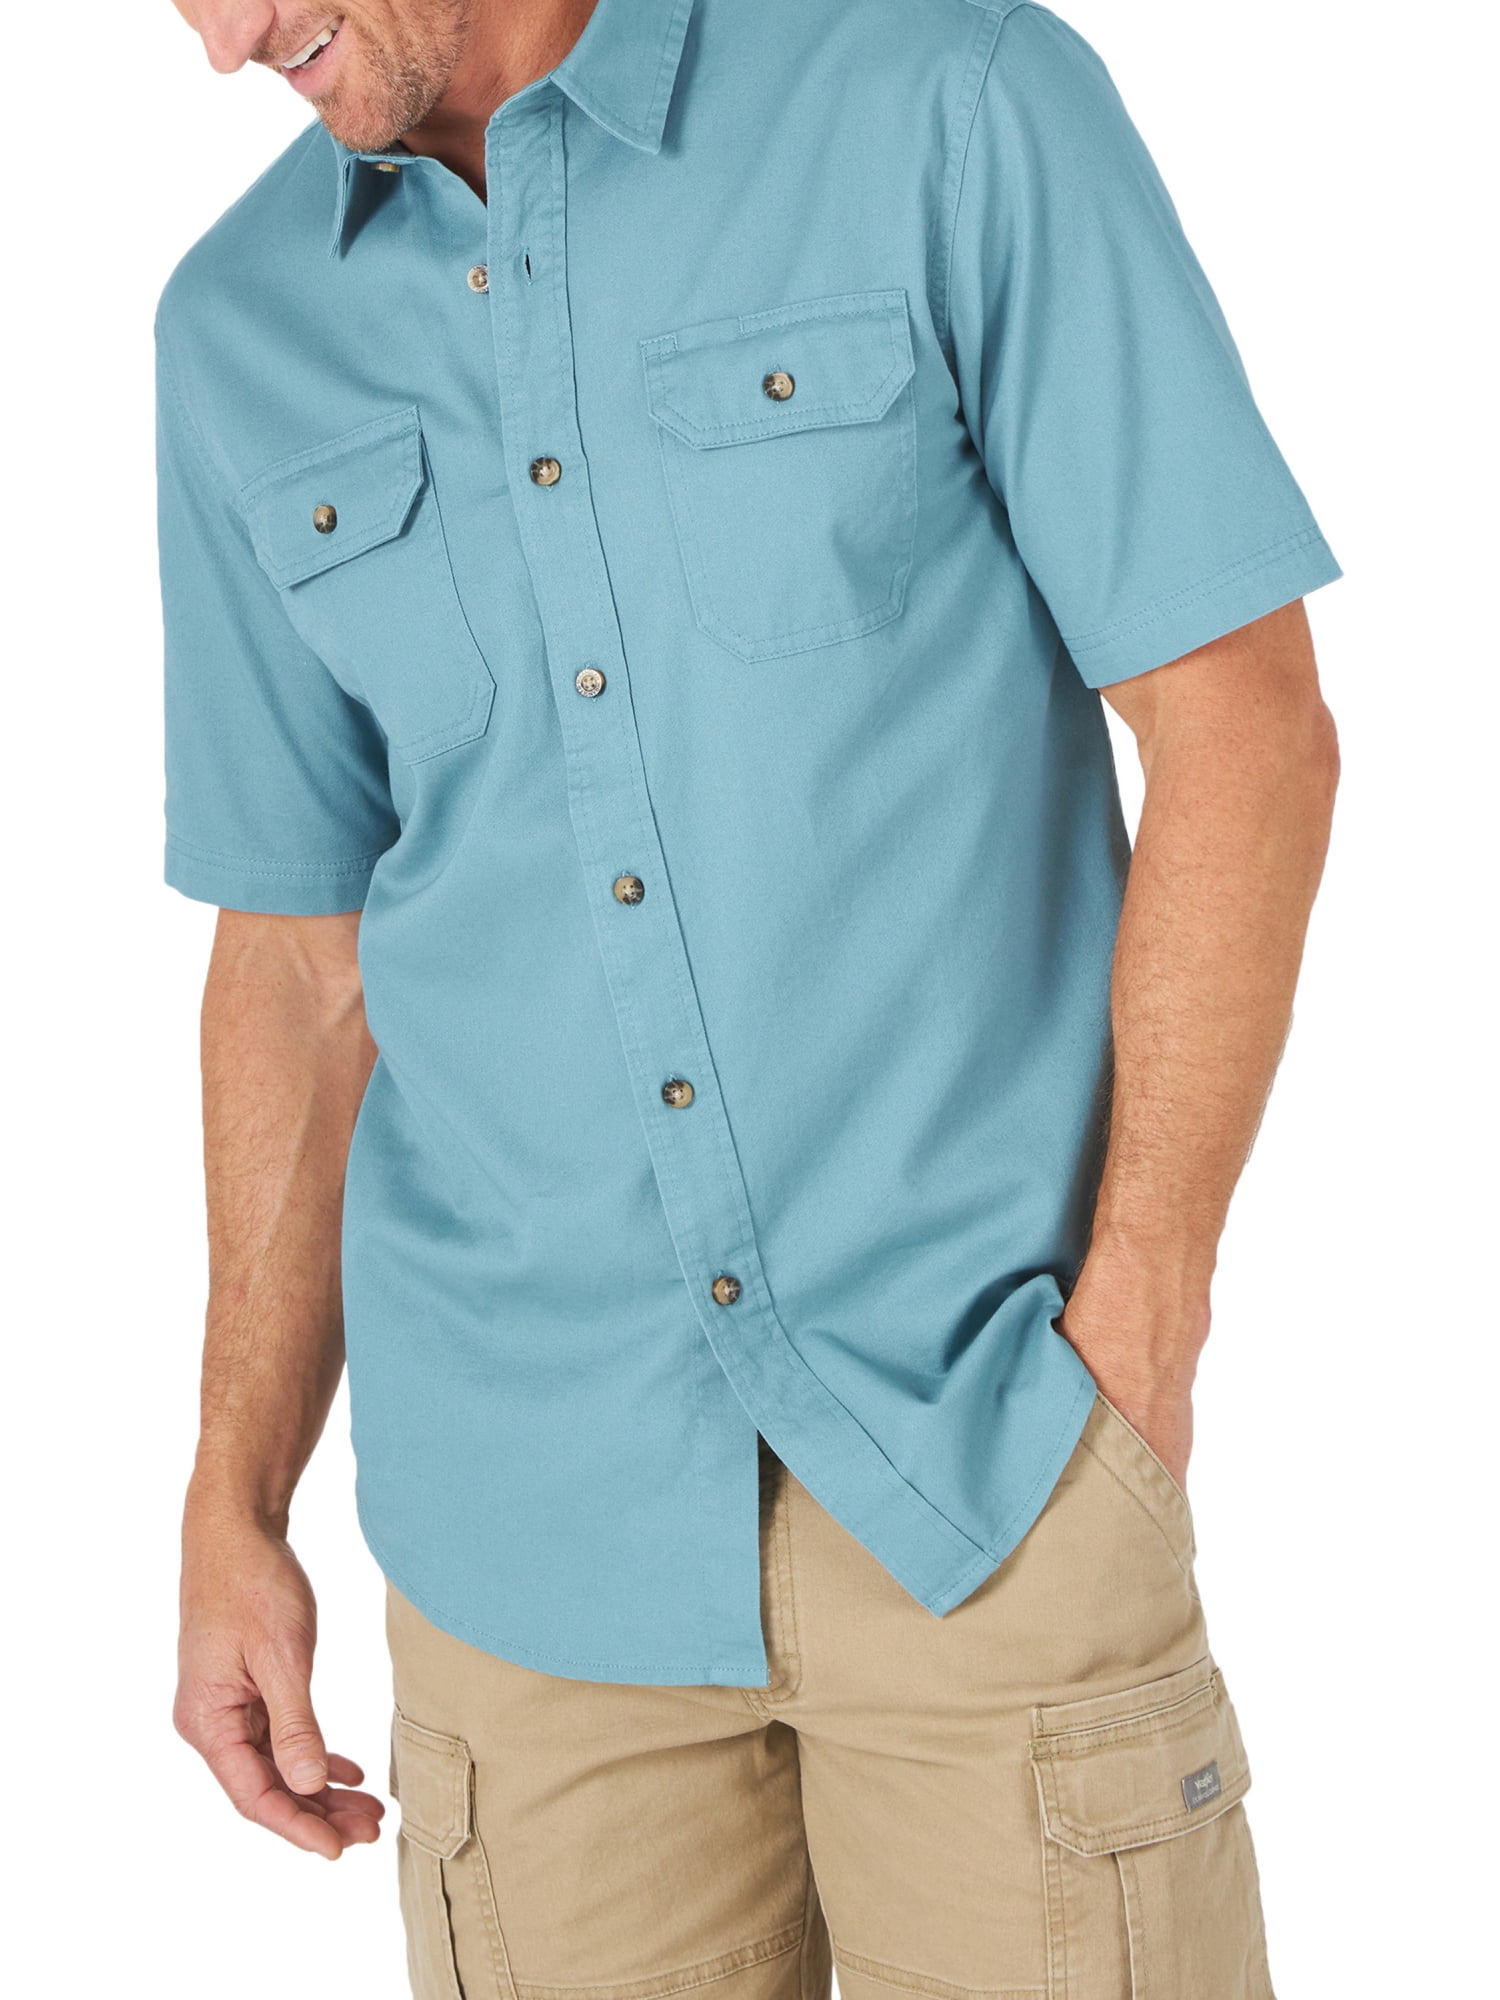 WRANGLER Mens AQUA Seafoam Blue Relaxed Fit Flex Button Down SS Shirt L XL NWT